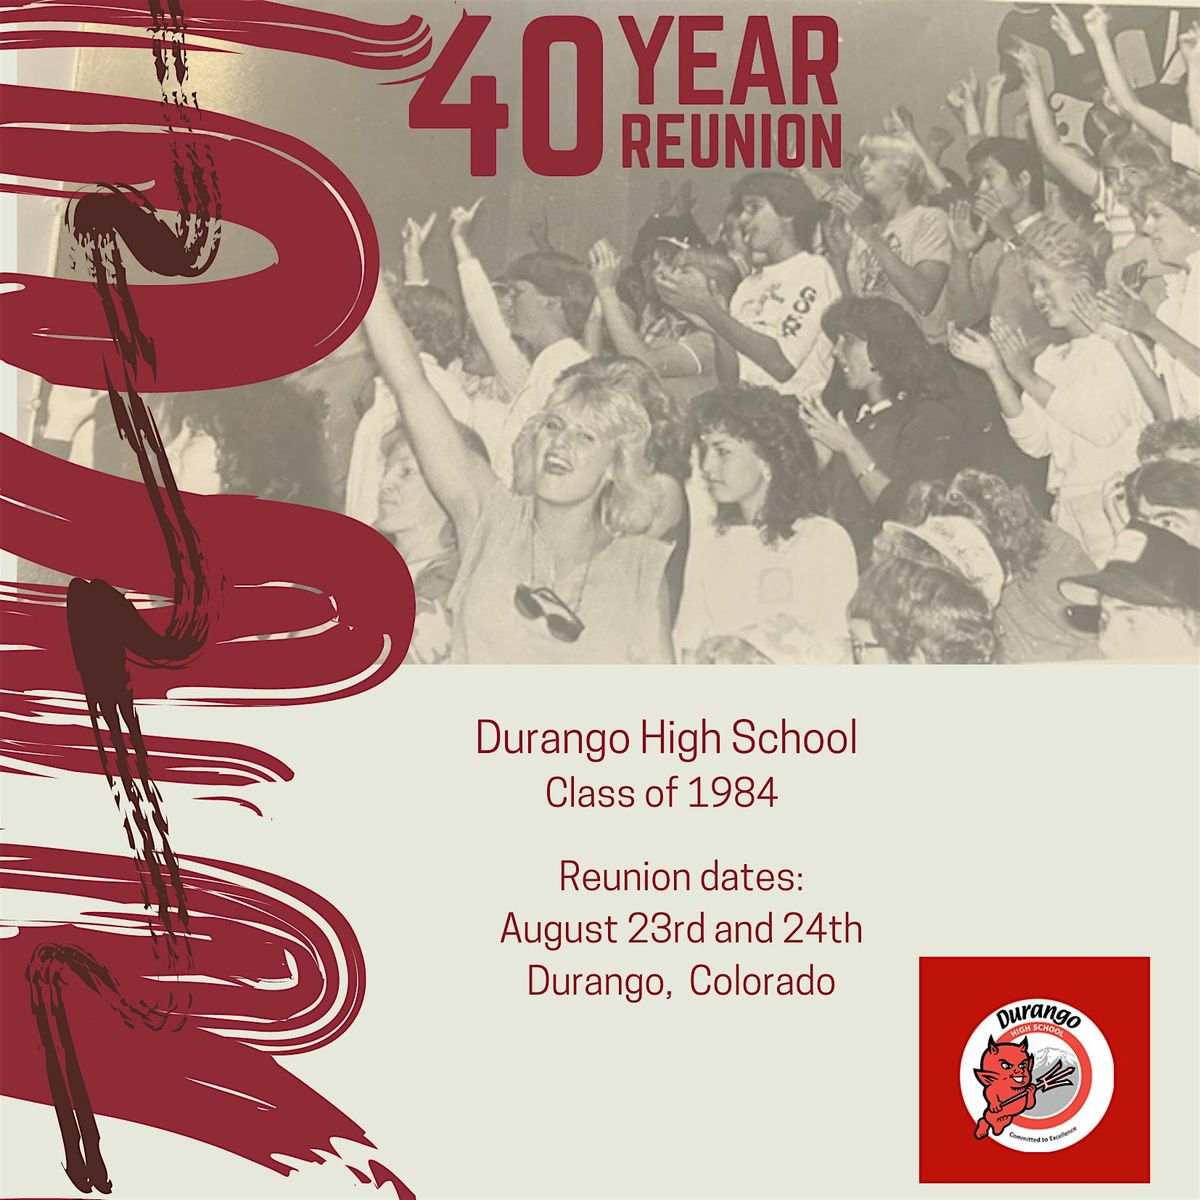 Durango High School 40th Reunion